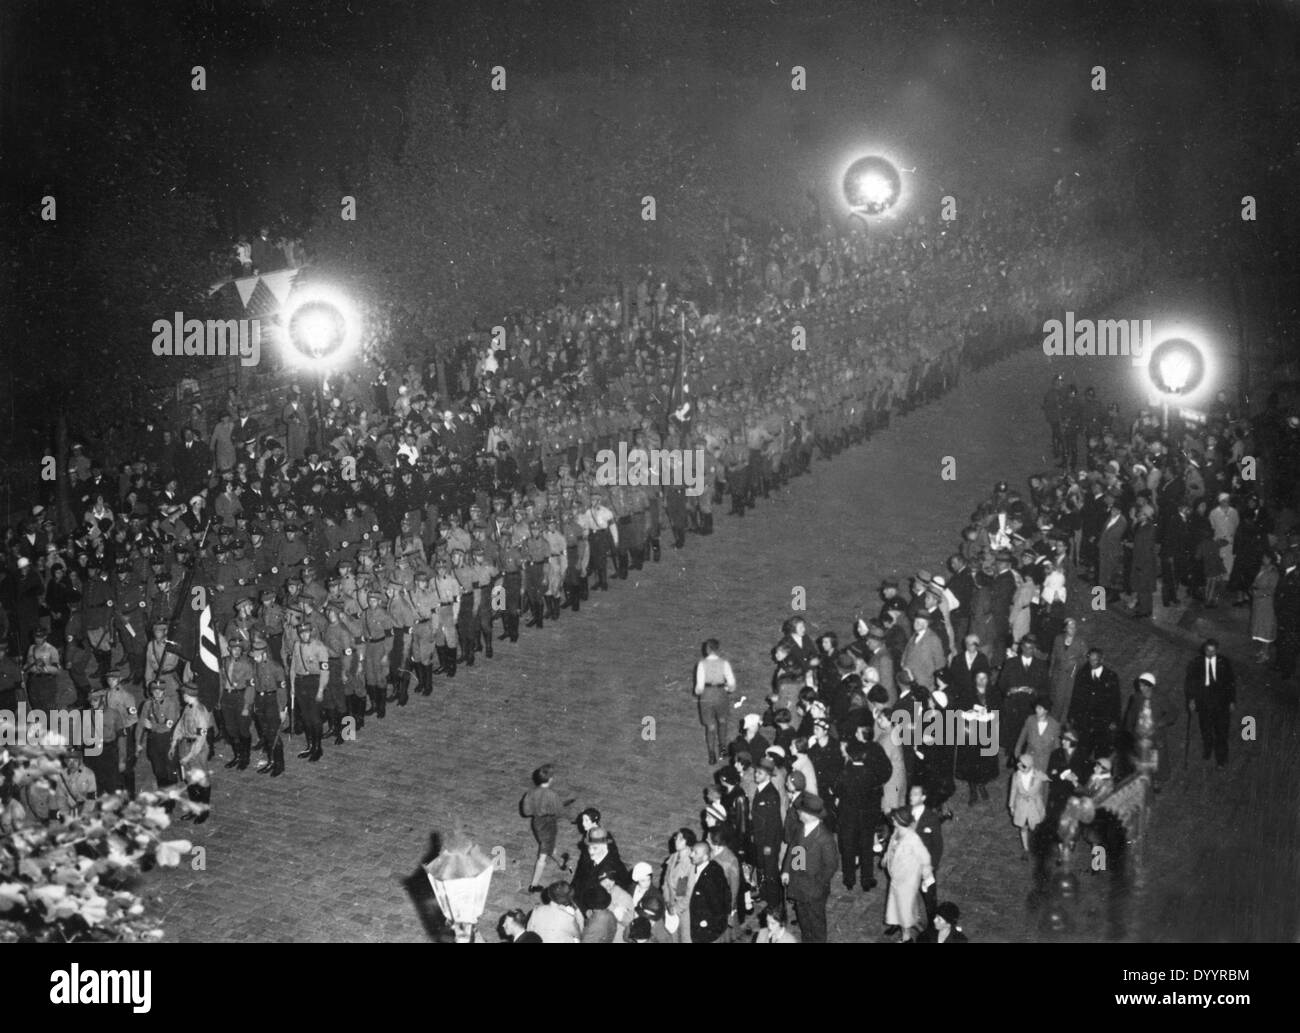 Torchlight procession seizure of power (movie still), 1933 Stock Photo